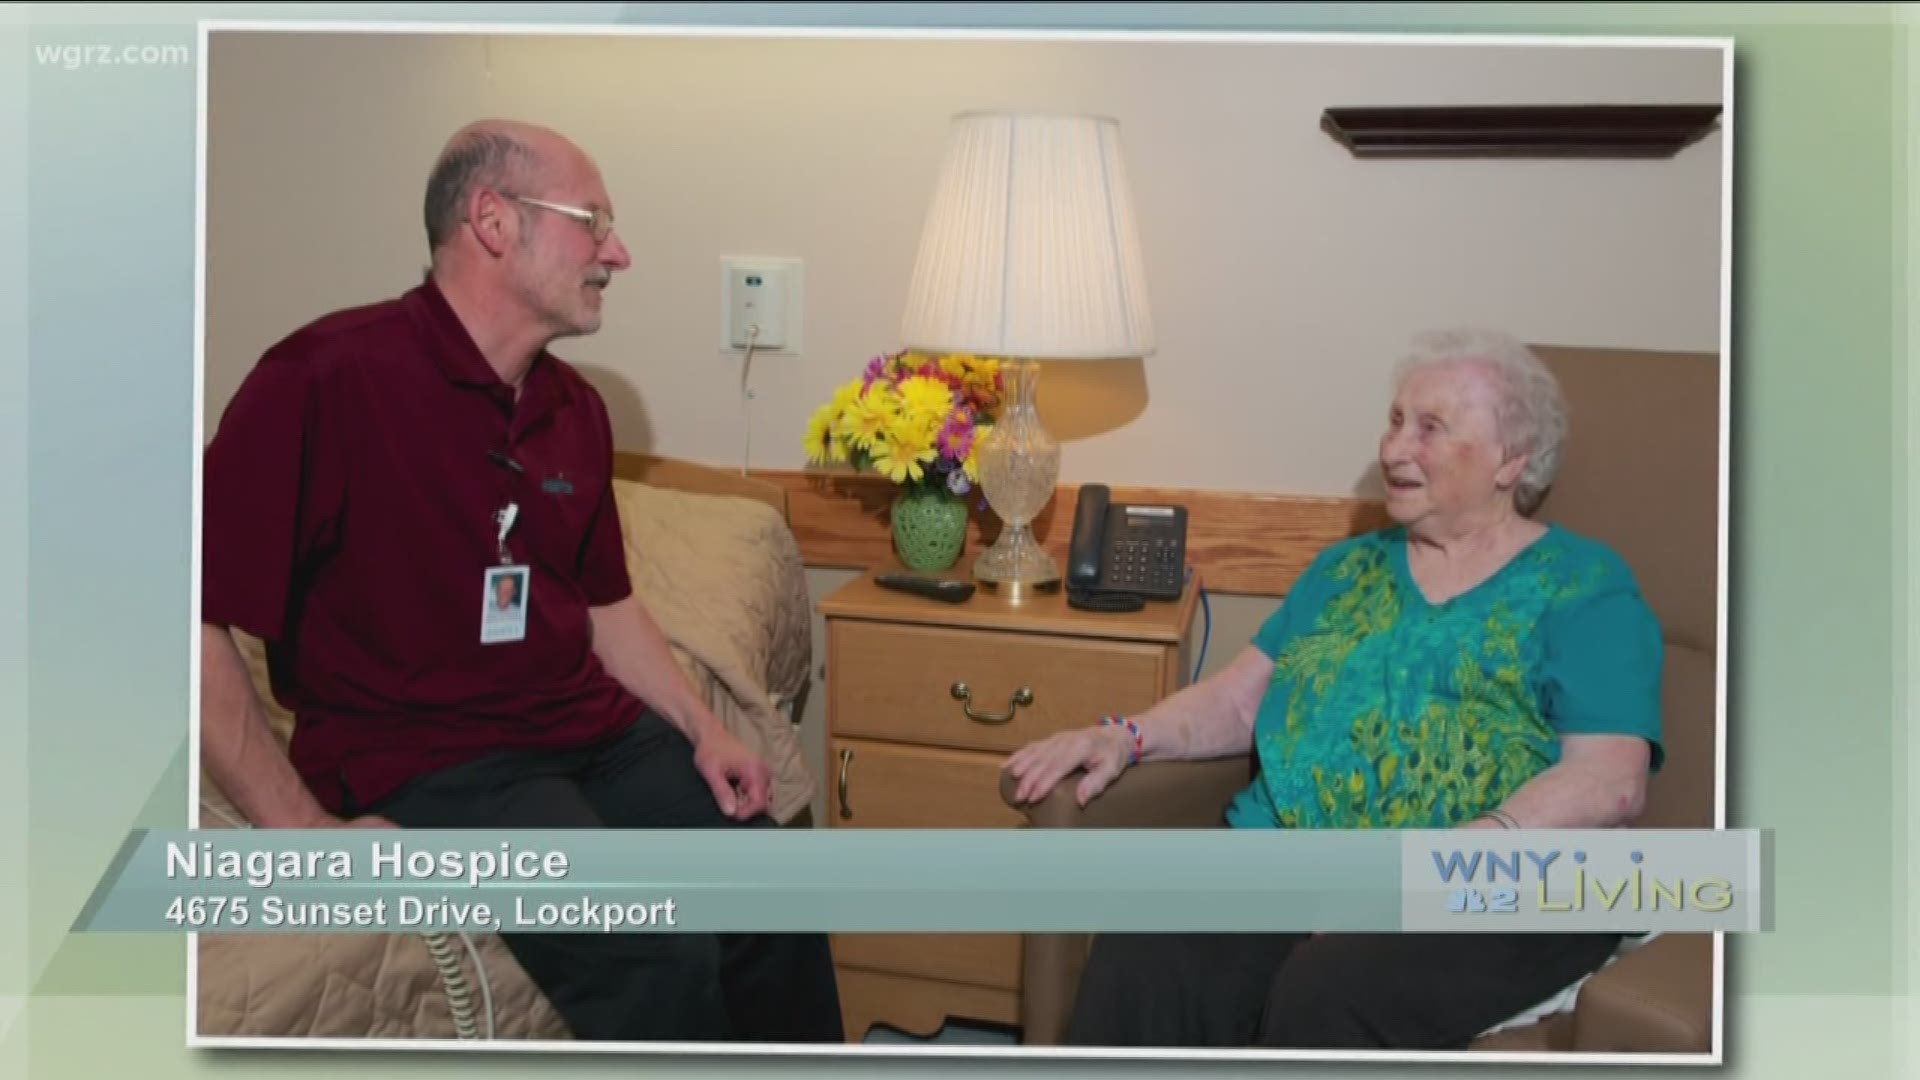 WNY Living - November 19 - Niagara Hospice